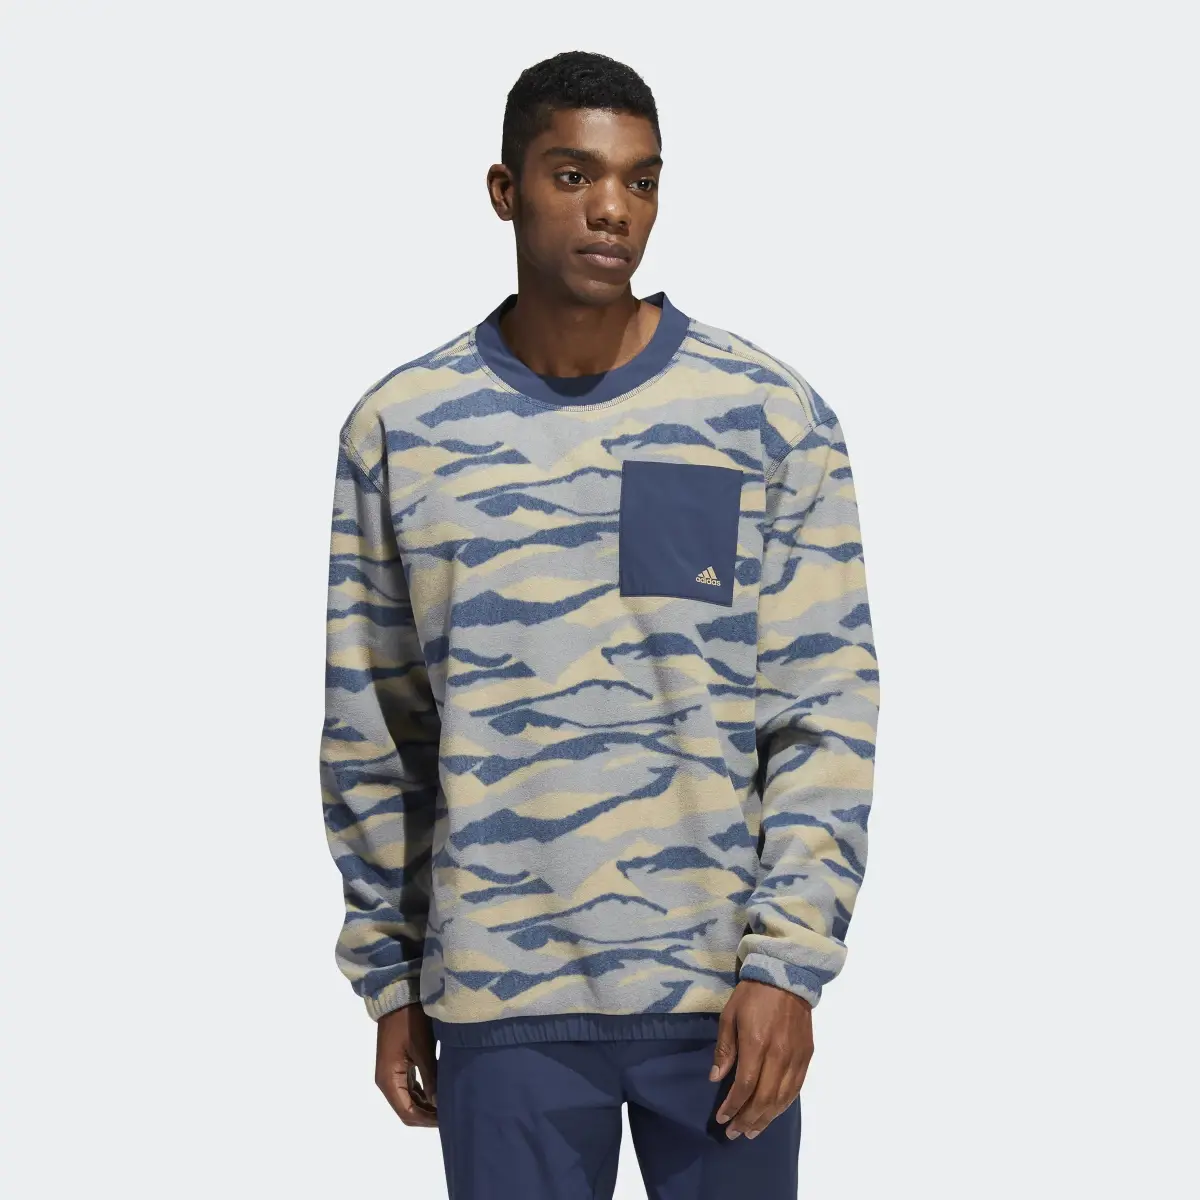 Adidas Texture-Print Sweatshirt. 2